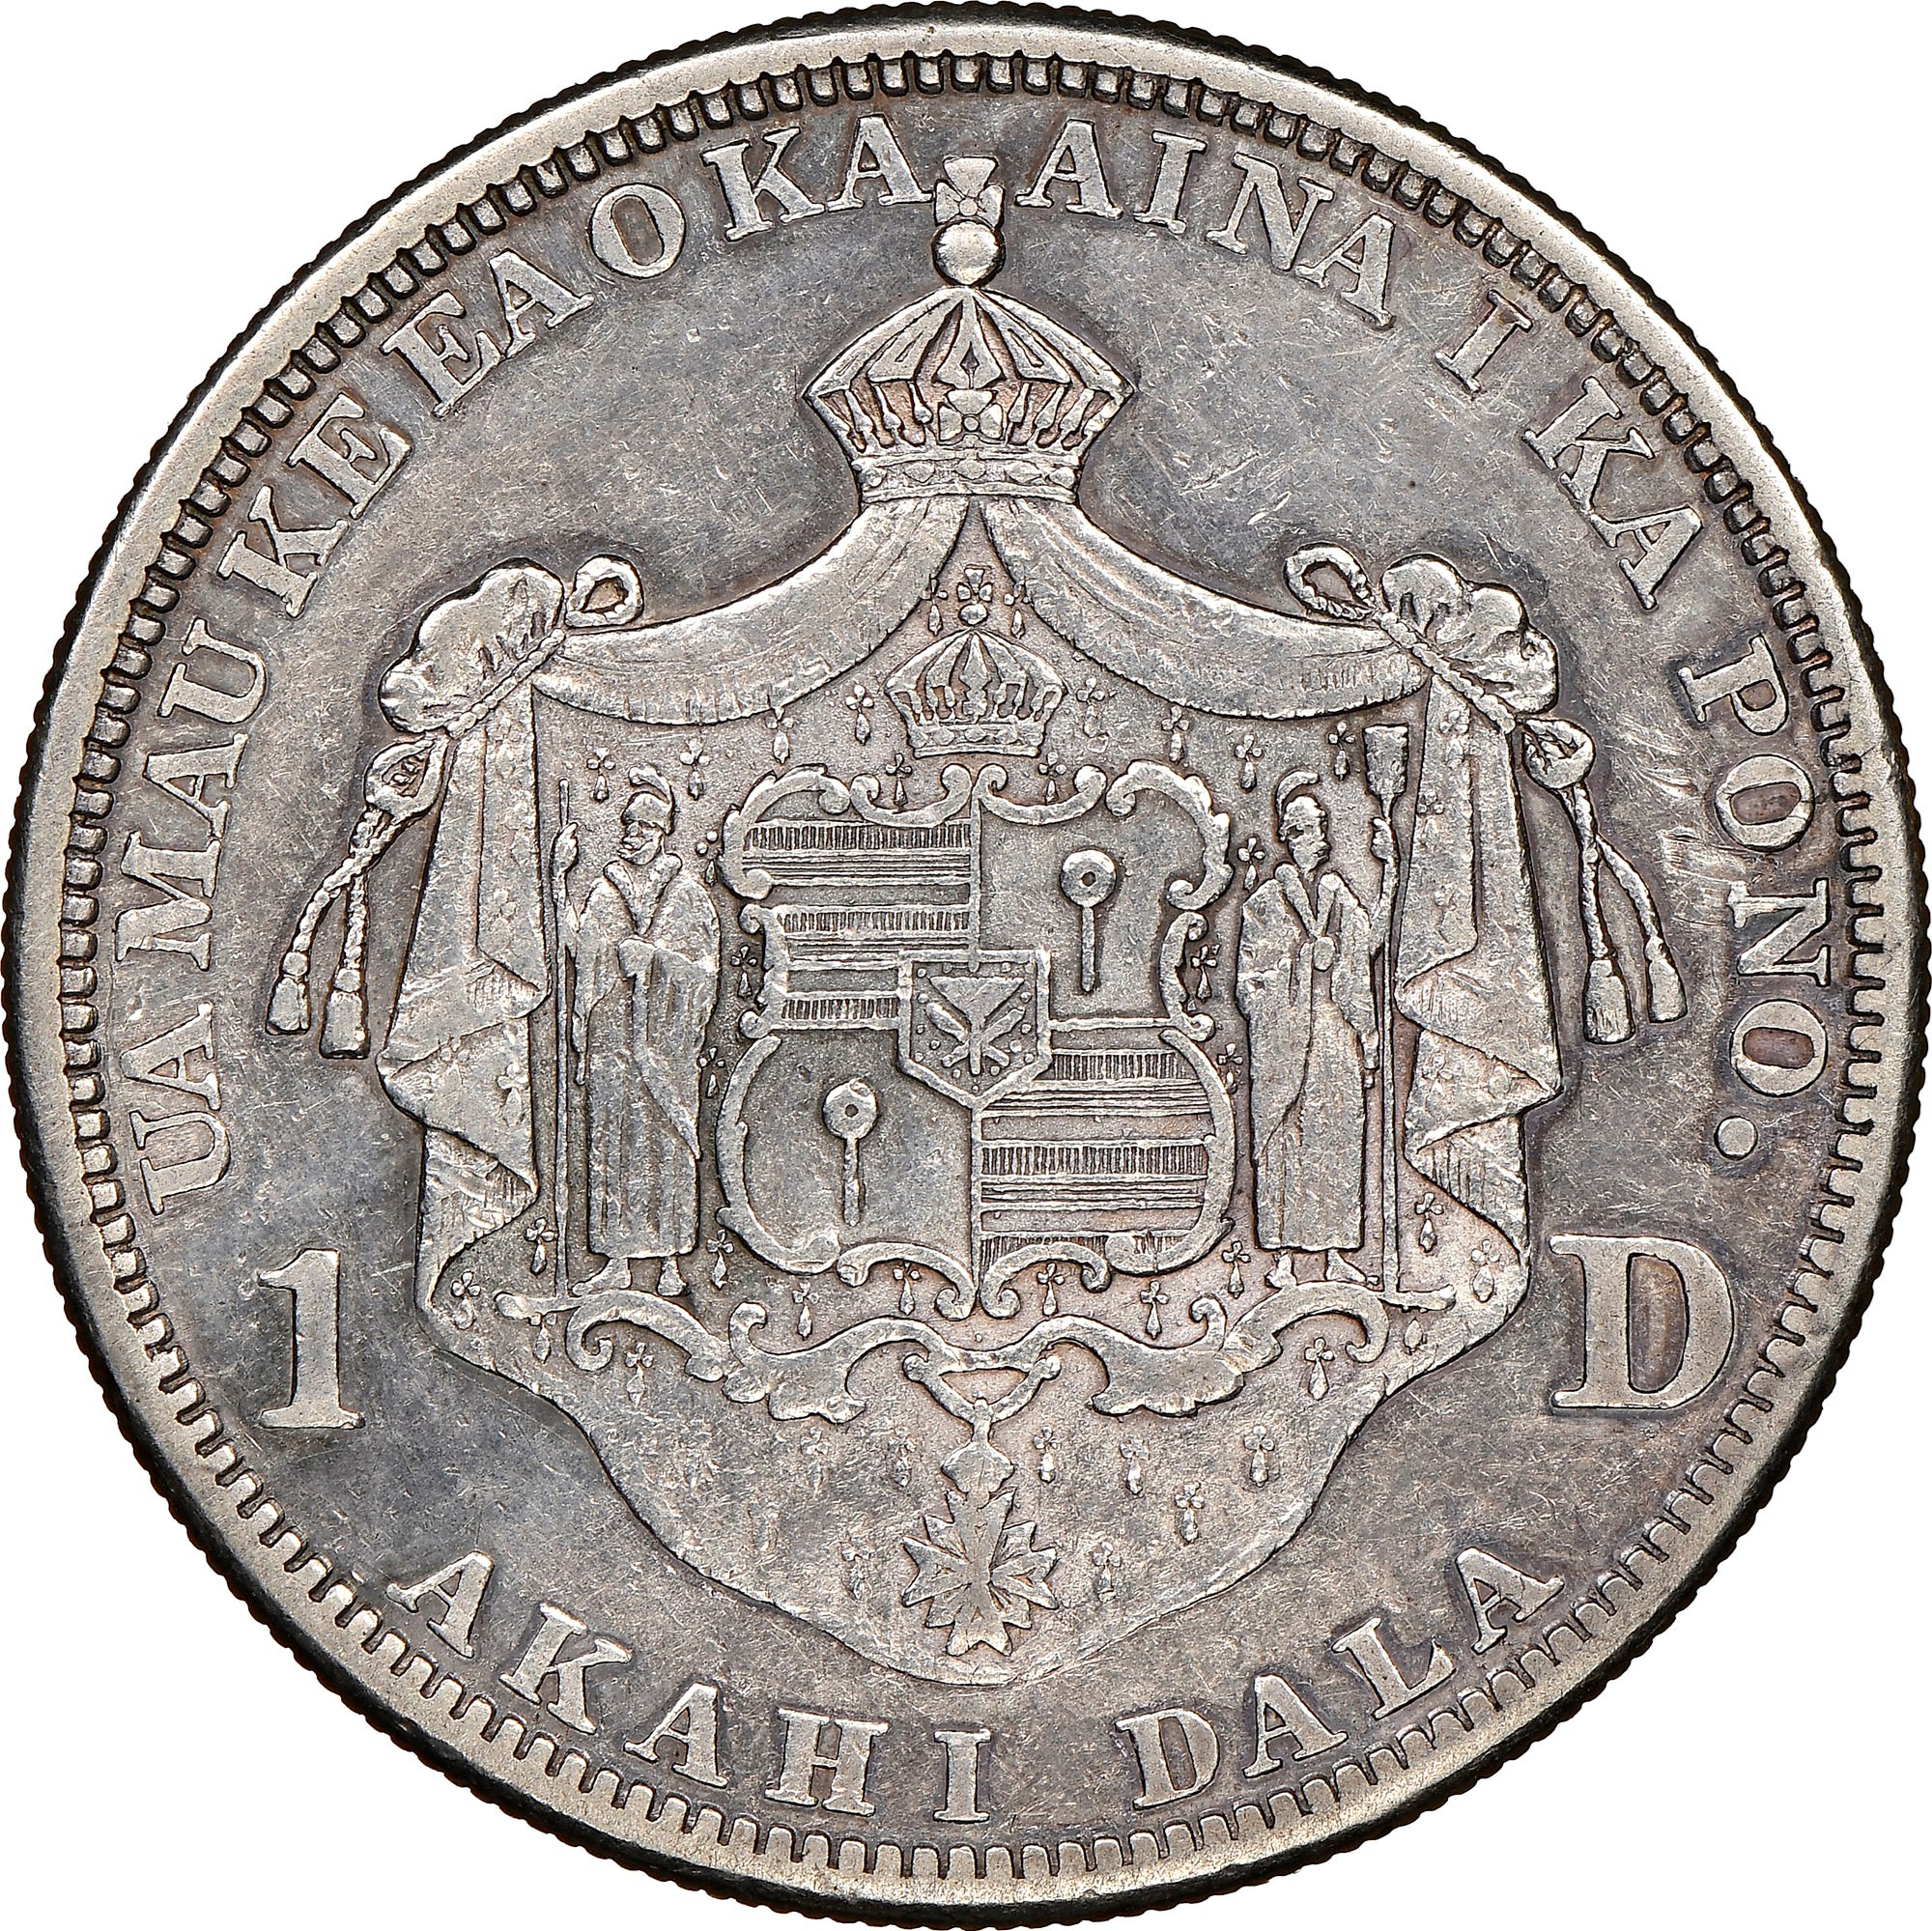 Kalākaua coinage - Wikipedia